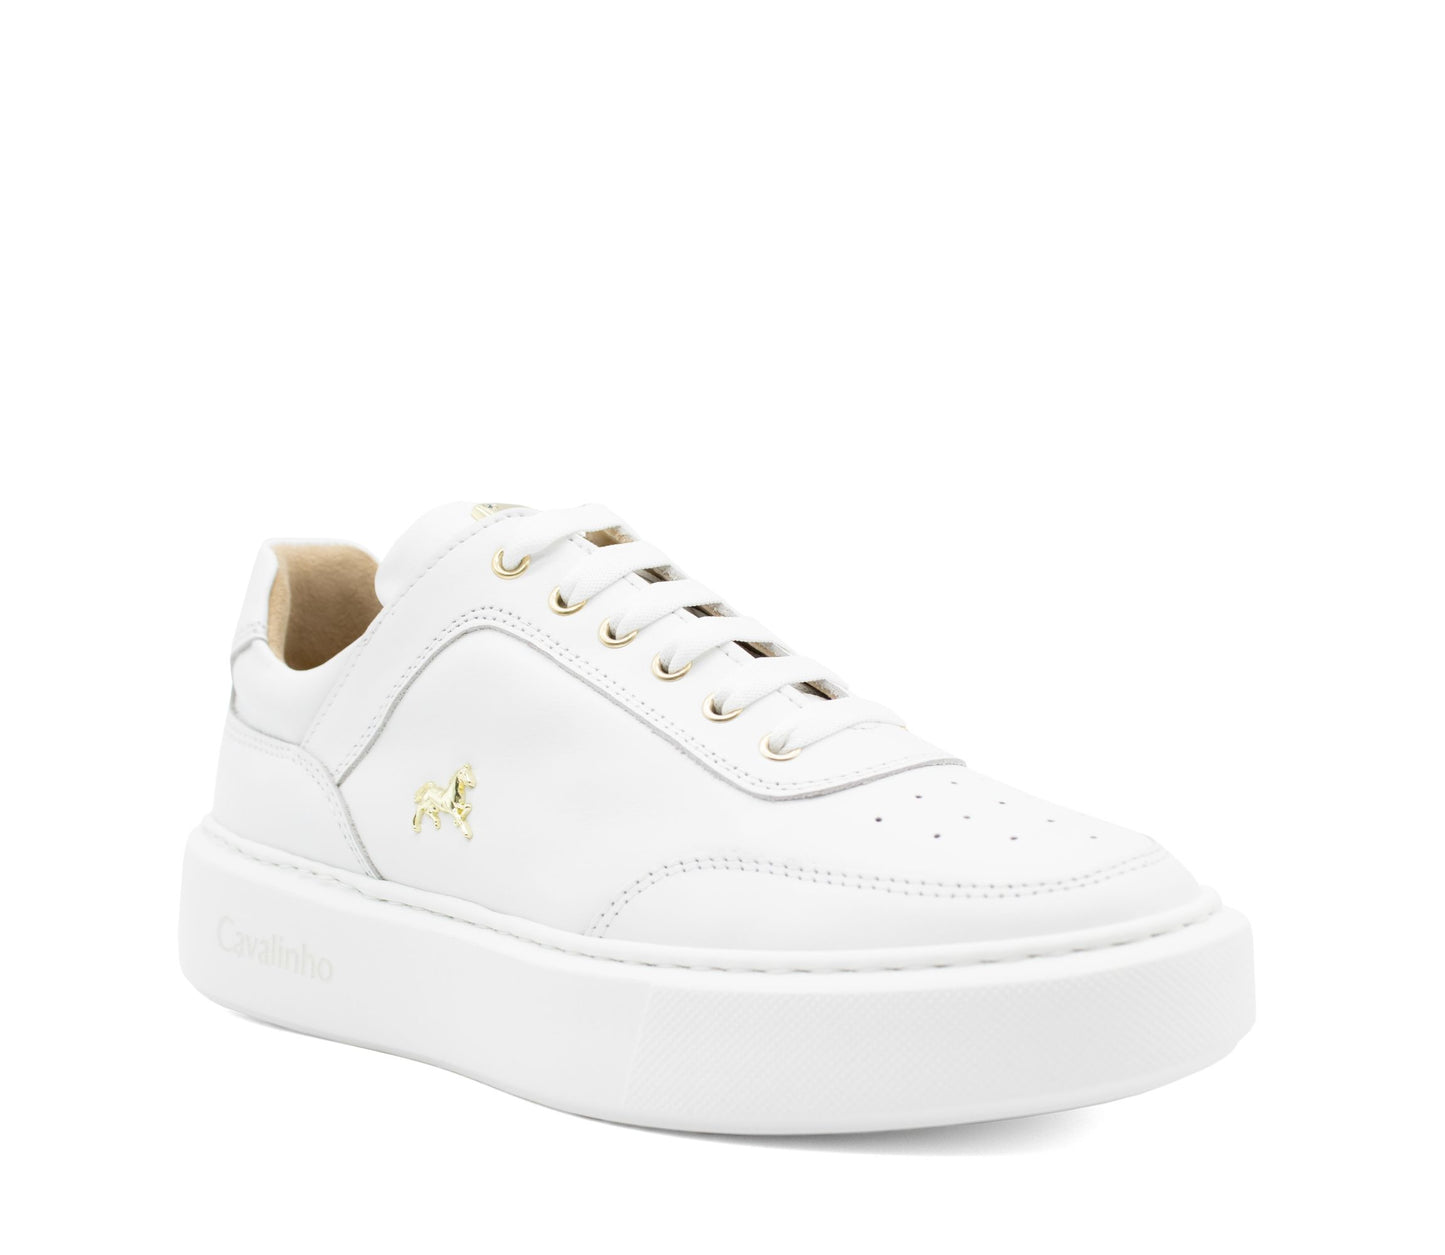 Cavalinho Delight Sneakers - White - 48010100.06_2